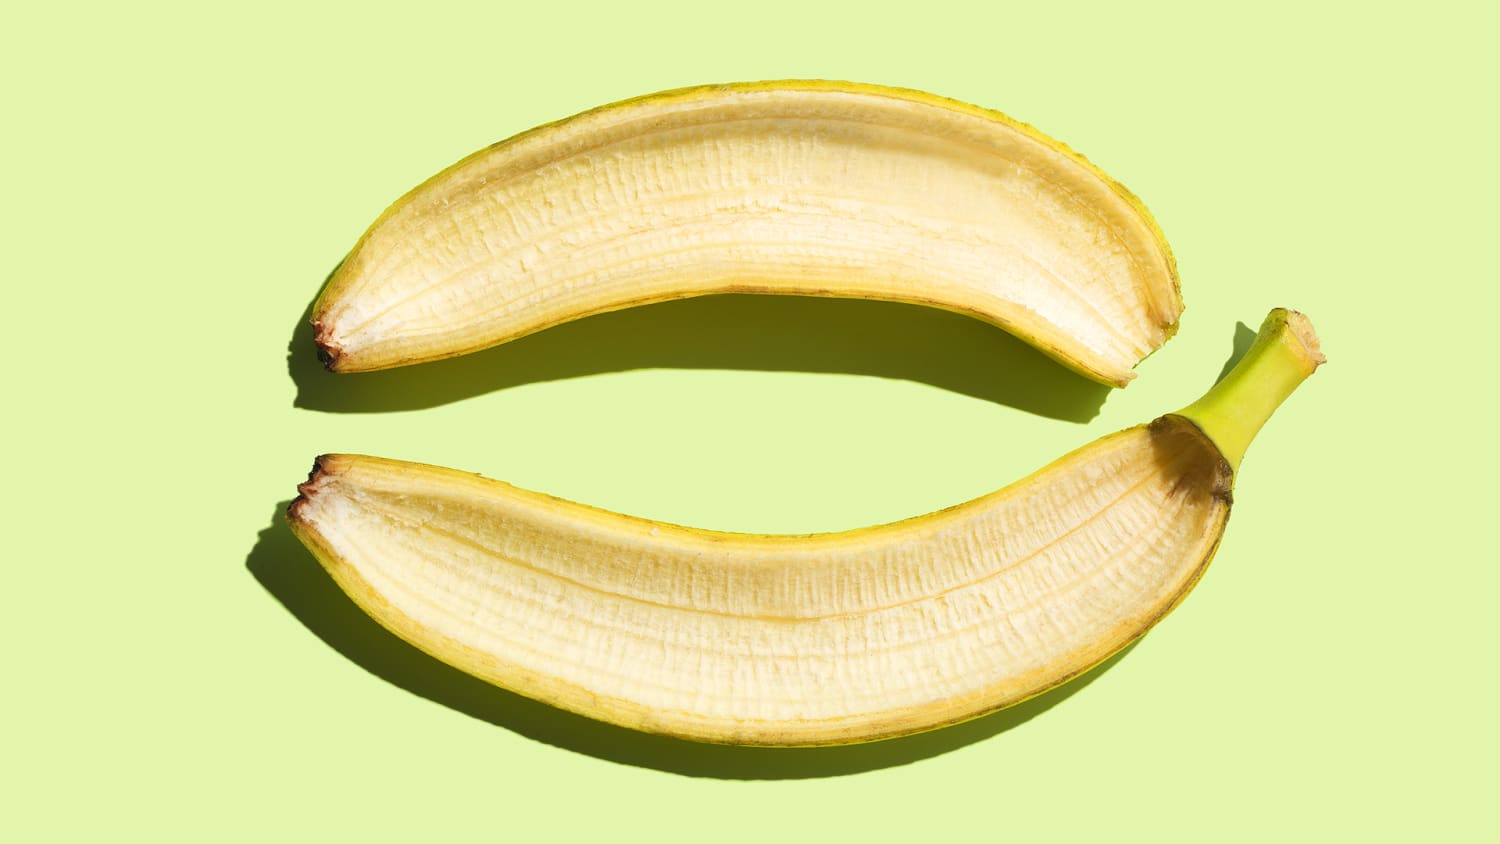 banana peeling investigatory project